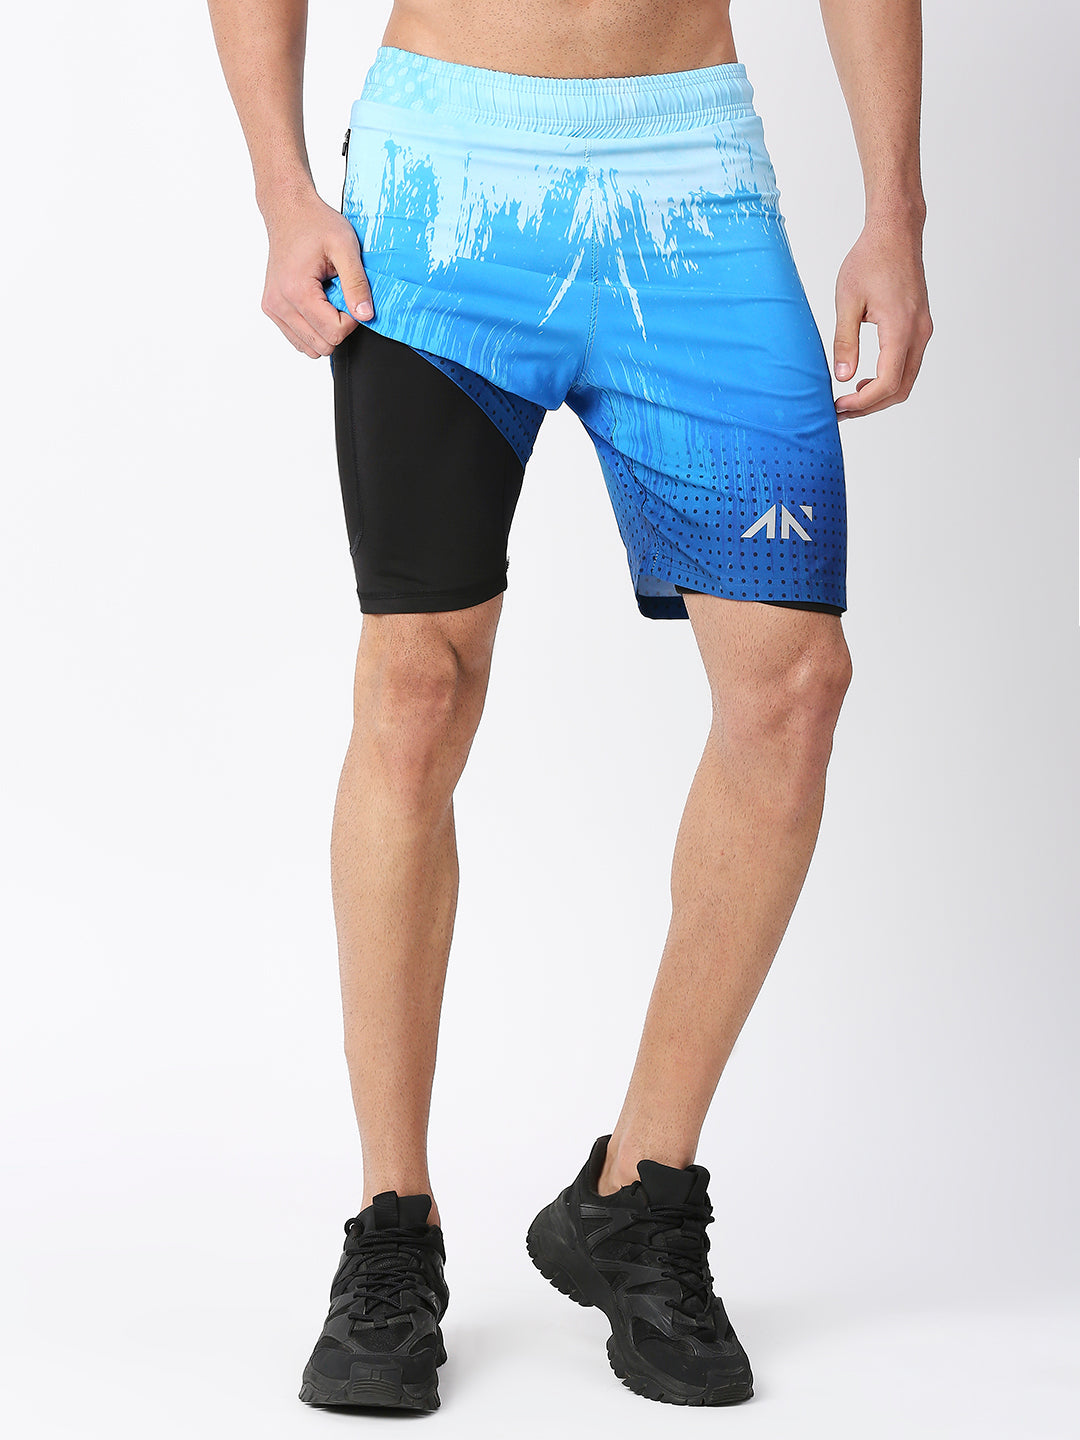 Shop Blue Workout Gym Compression Shorts For Mens Physique – AestheticNation